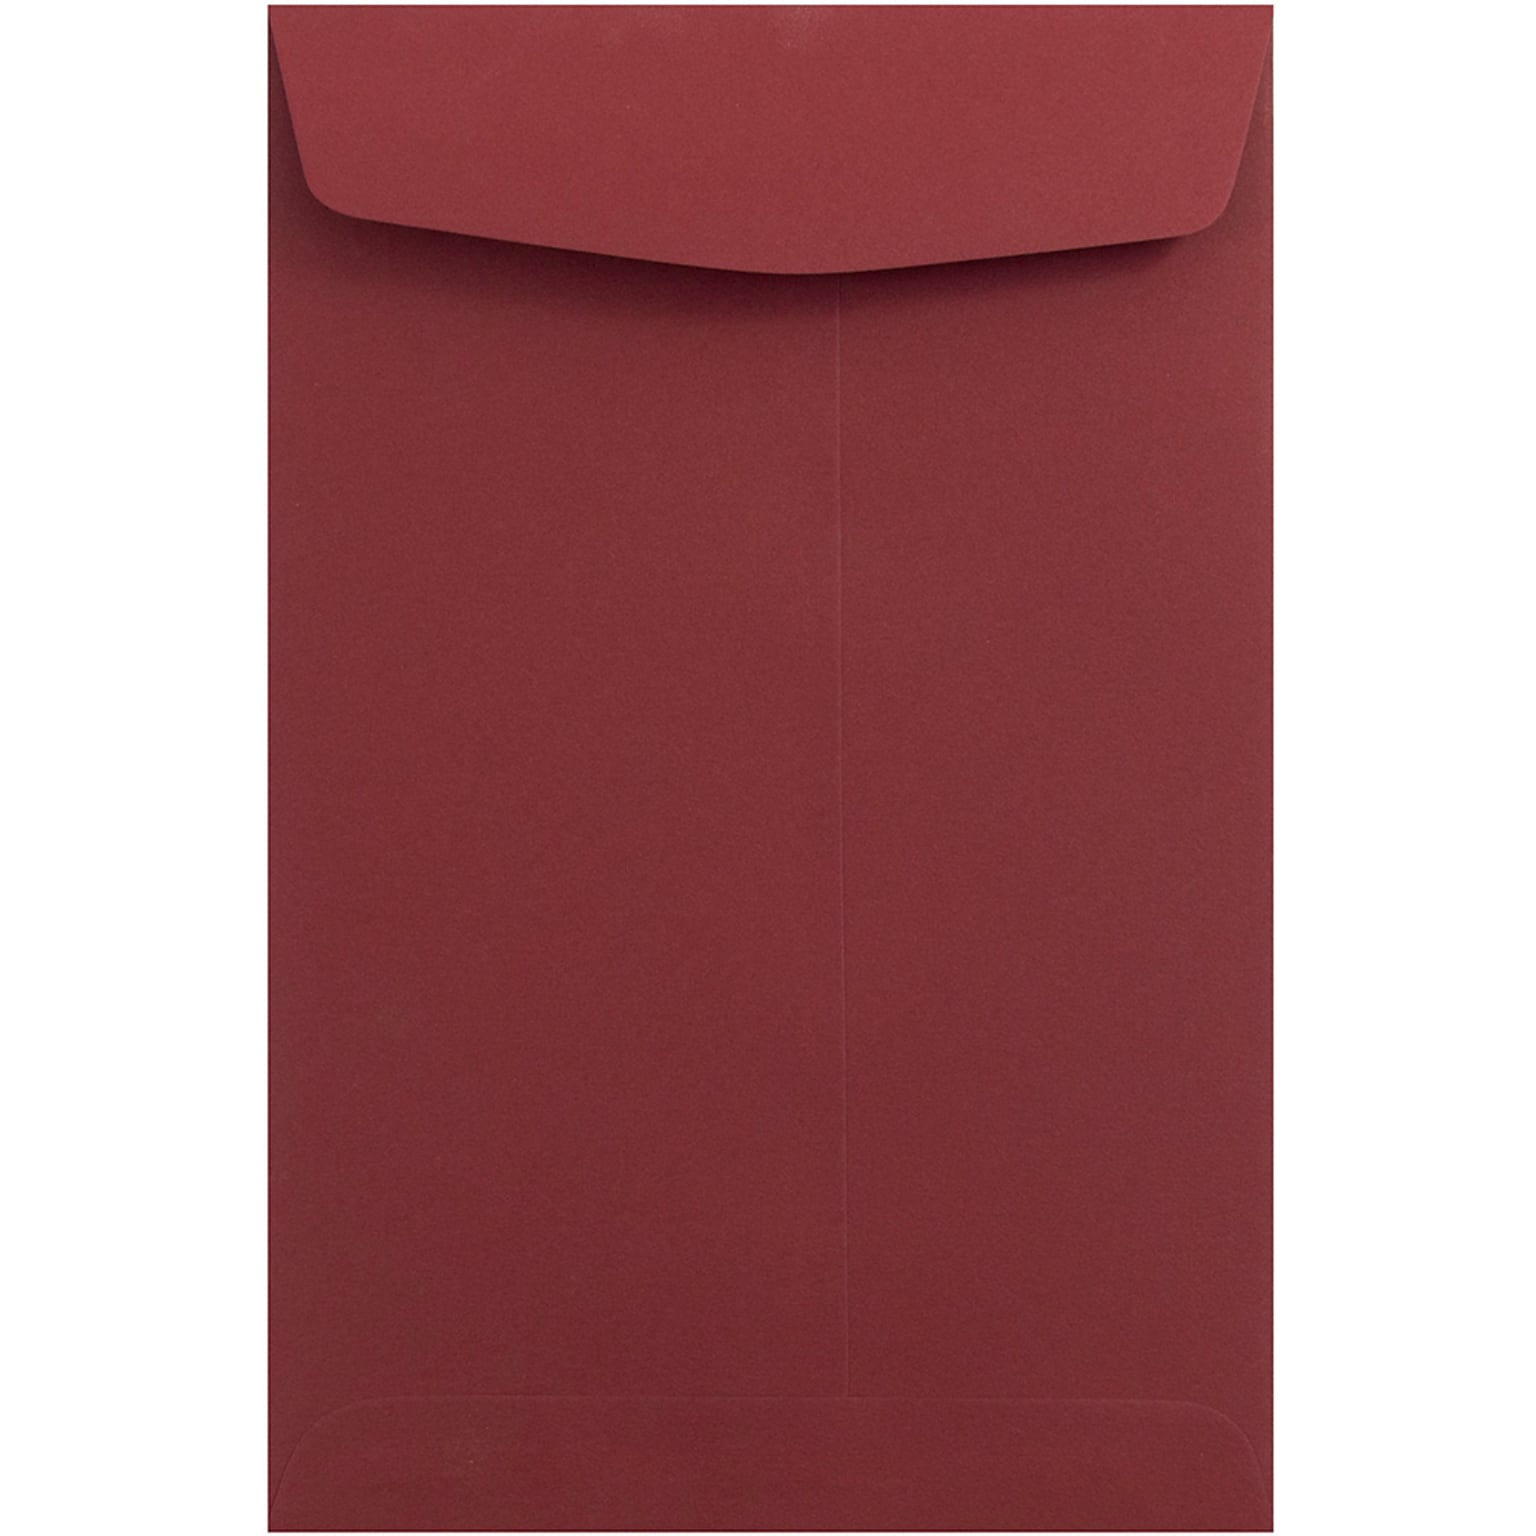 JAM Paper 6 x 9 Open End Catalog Envelopes, Dark Red, 25/Pack (31287522a)